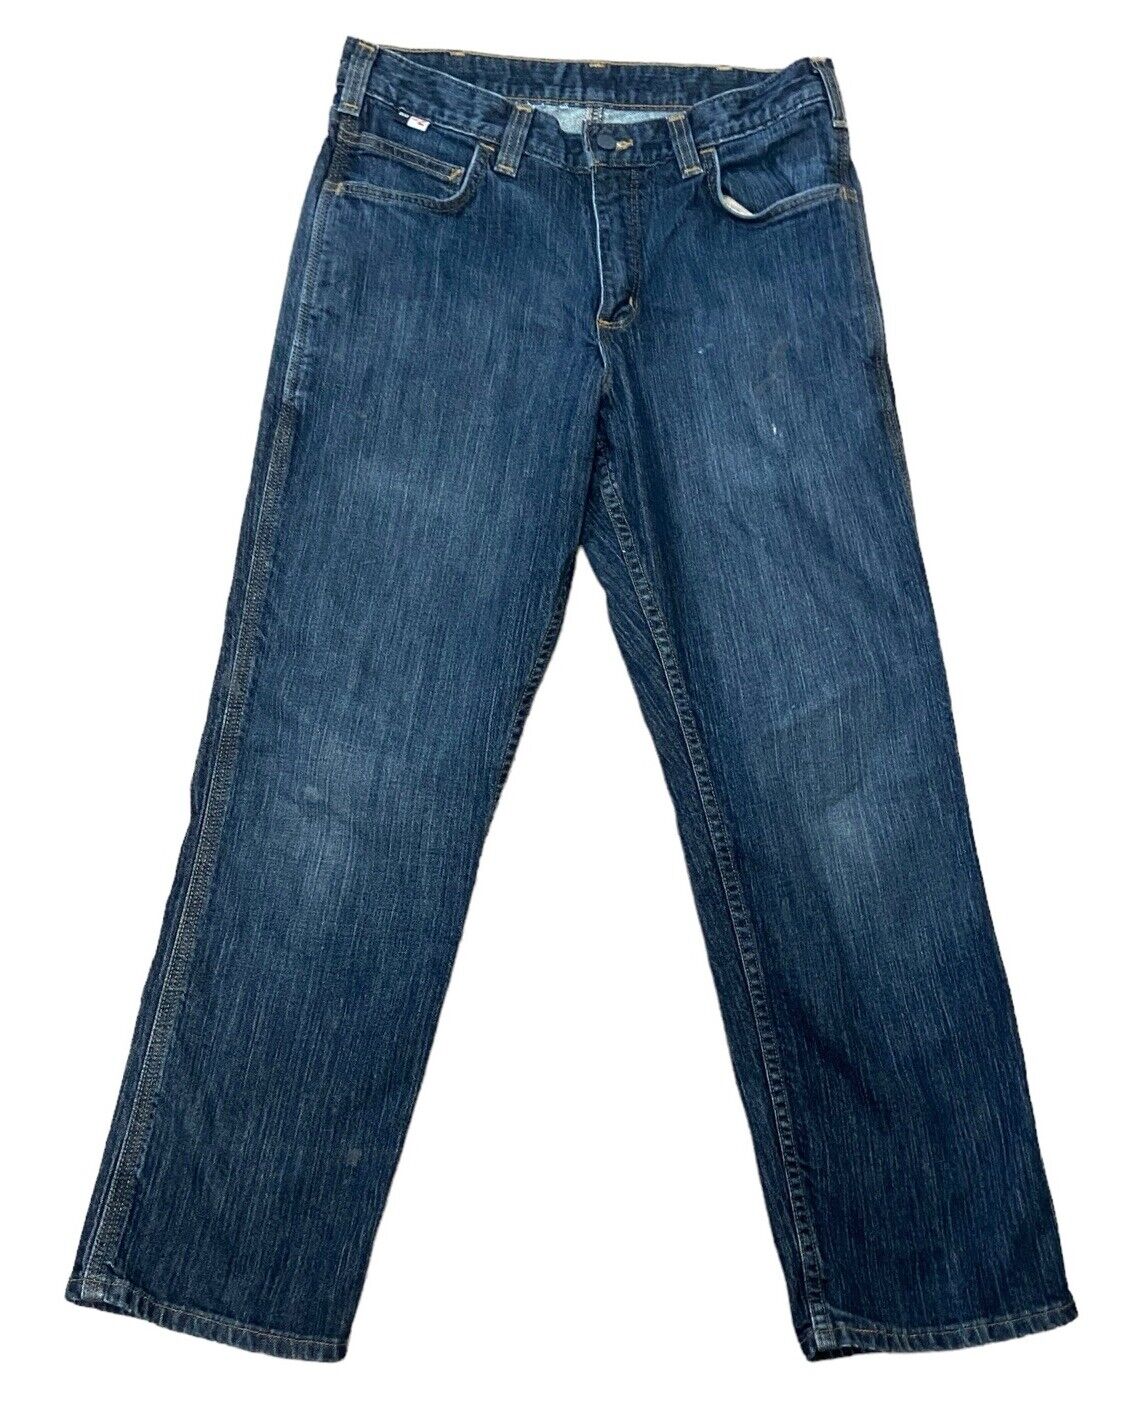 Carhartt Men's FR Denim Jeans, Distressed, 32x29 … - image 1